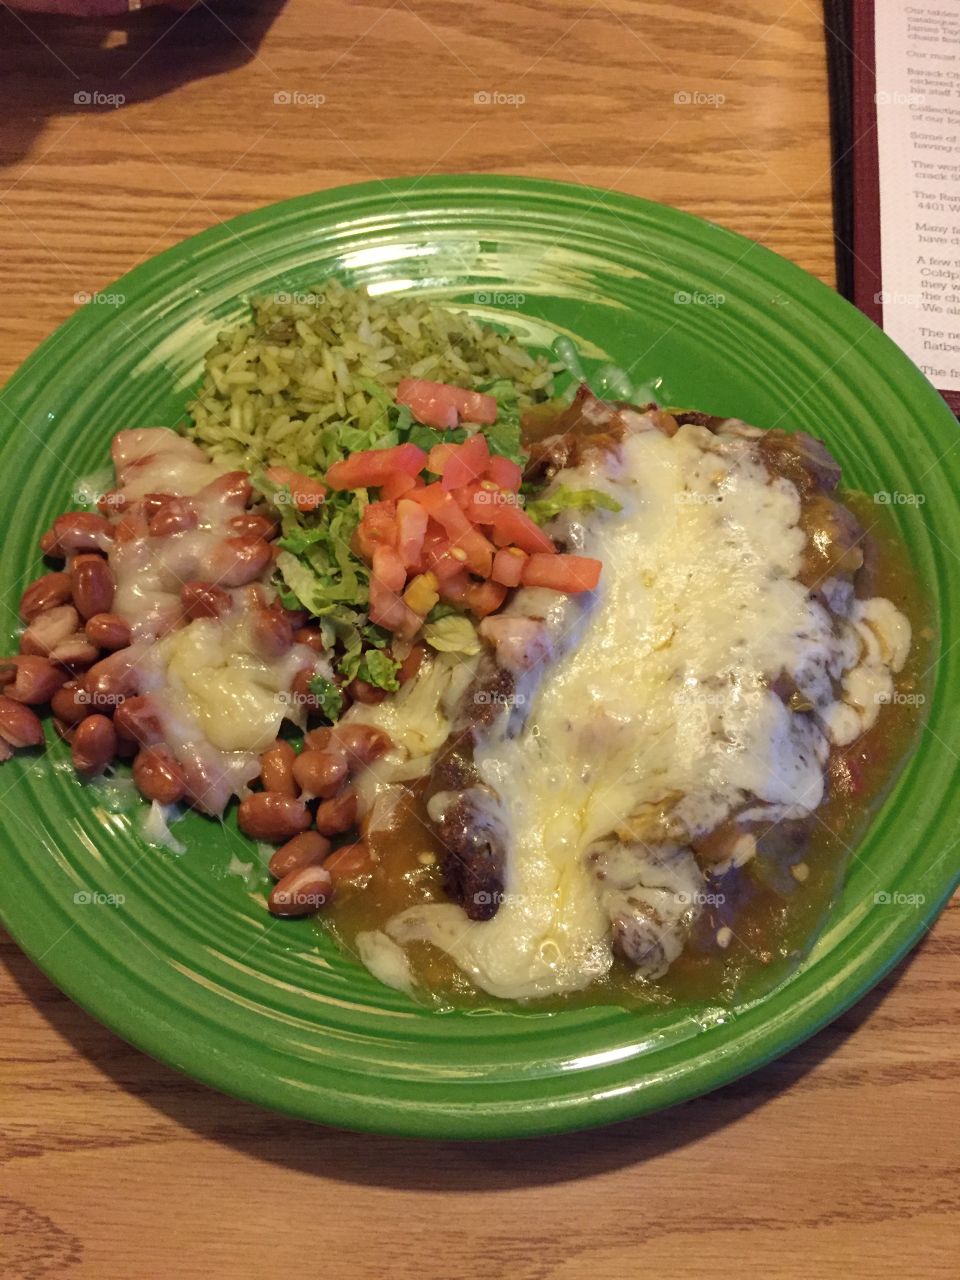 New Mexico cuisine